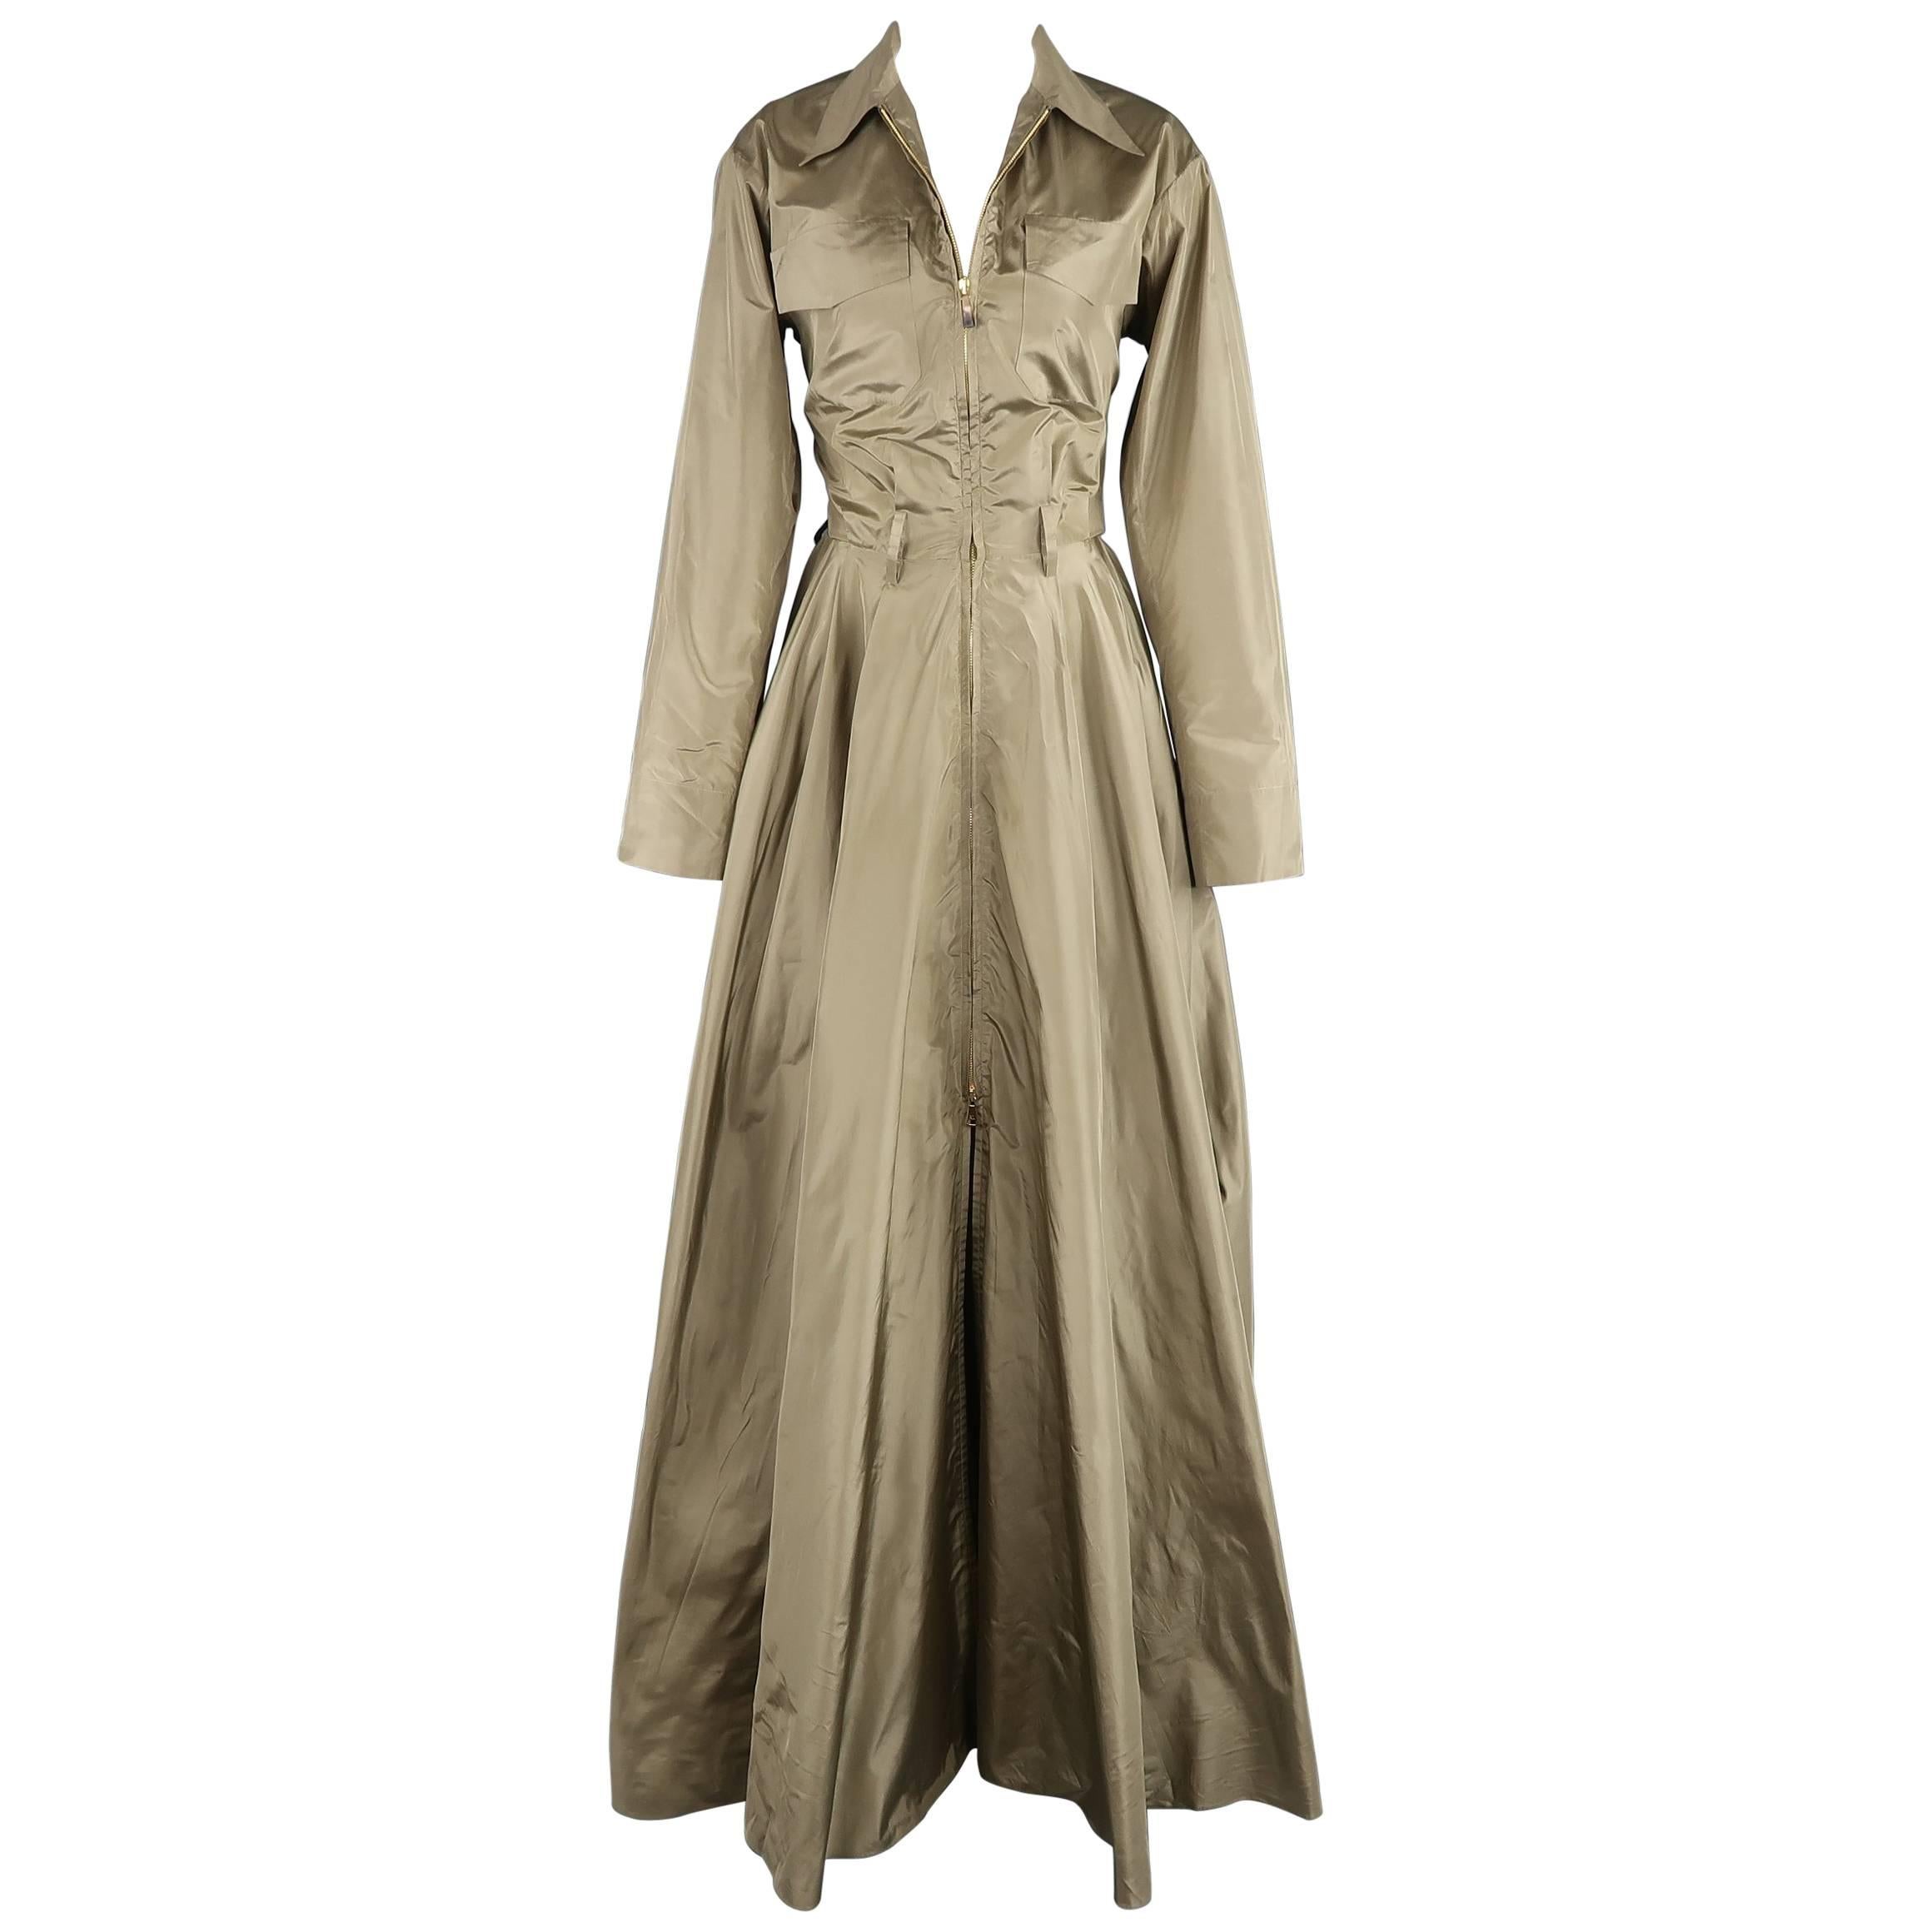 RALPH LAUREN Collection Size 4 Olive Silk Taffeta Sahara Parachute Evening Gown